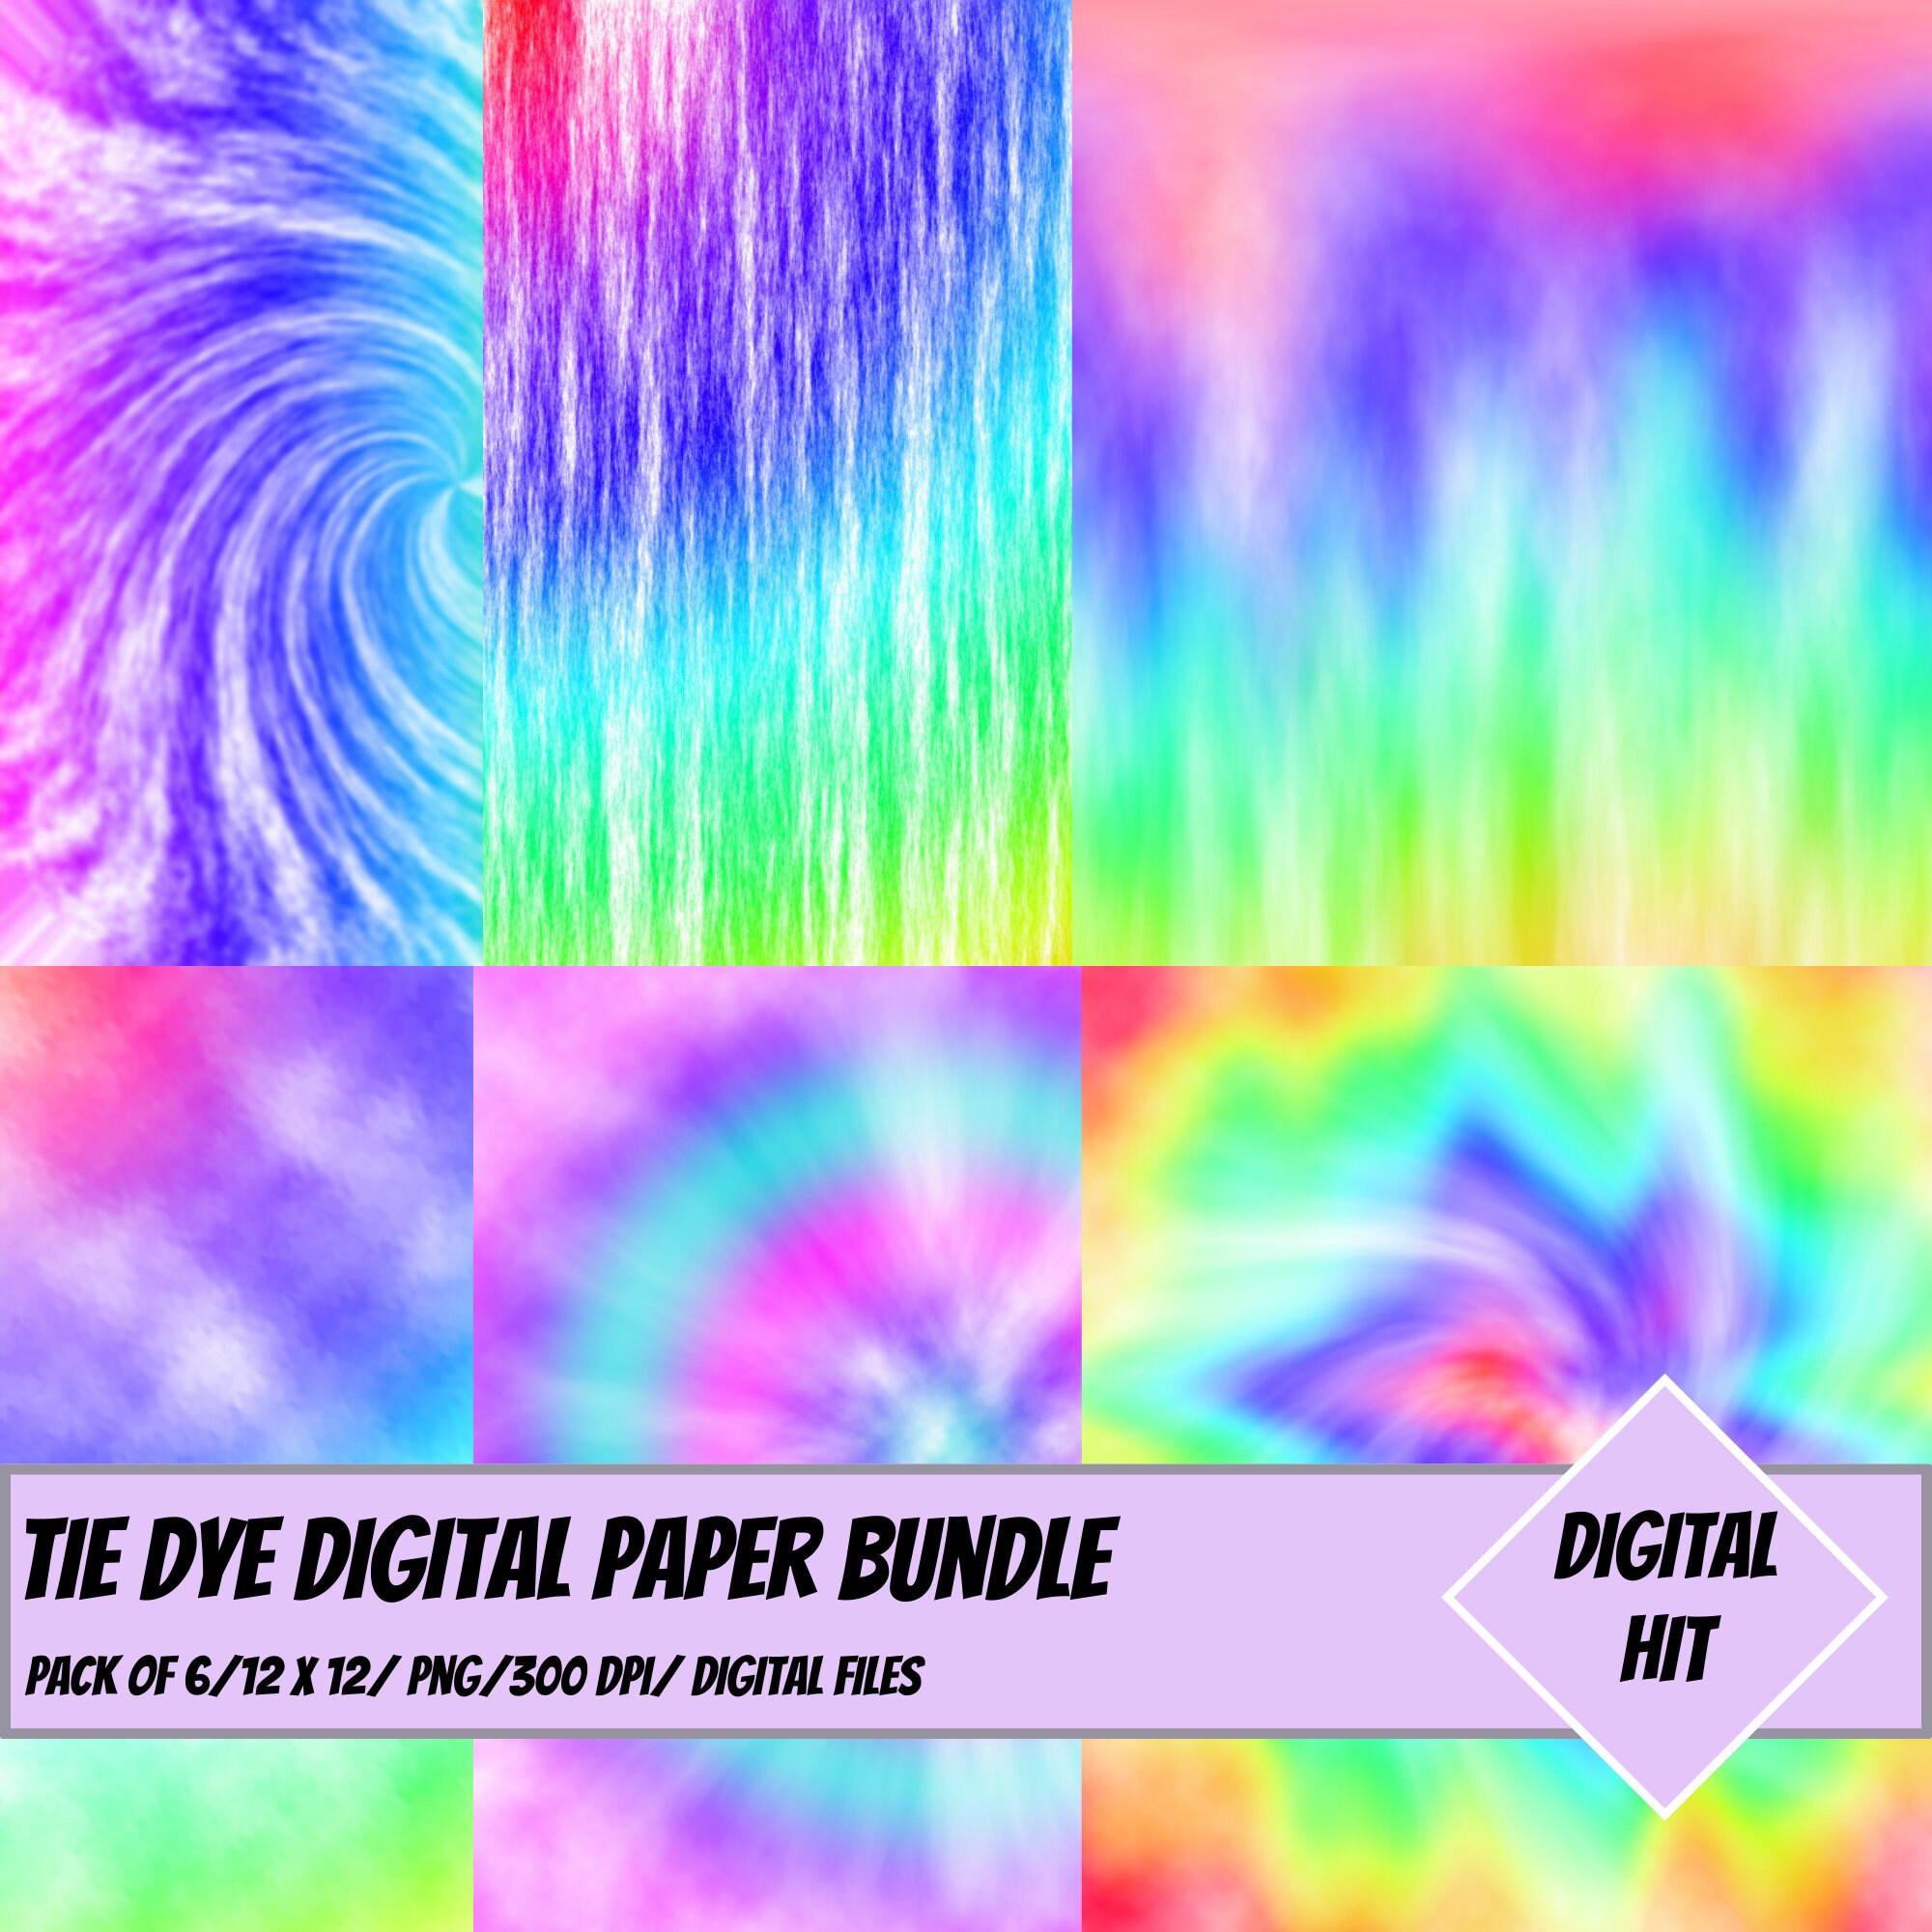 Light Blue Glitter Digital Paper,digital Paper, Contact Paper,glam Digital  Paper, Glitter Background, Digital Paper, Digital Download 